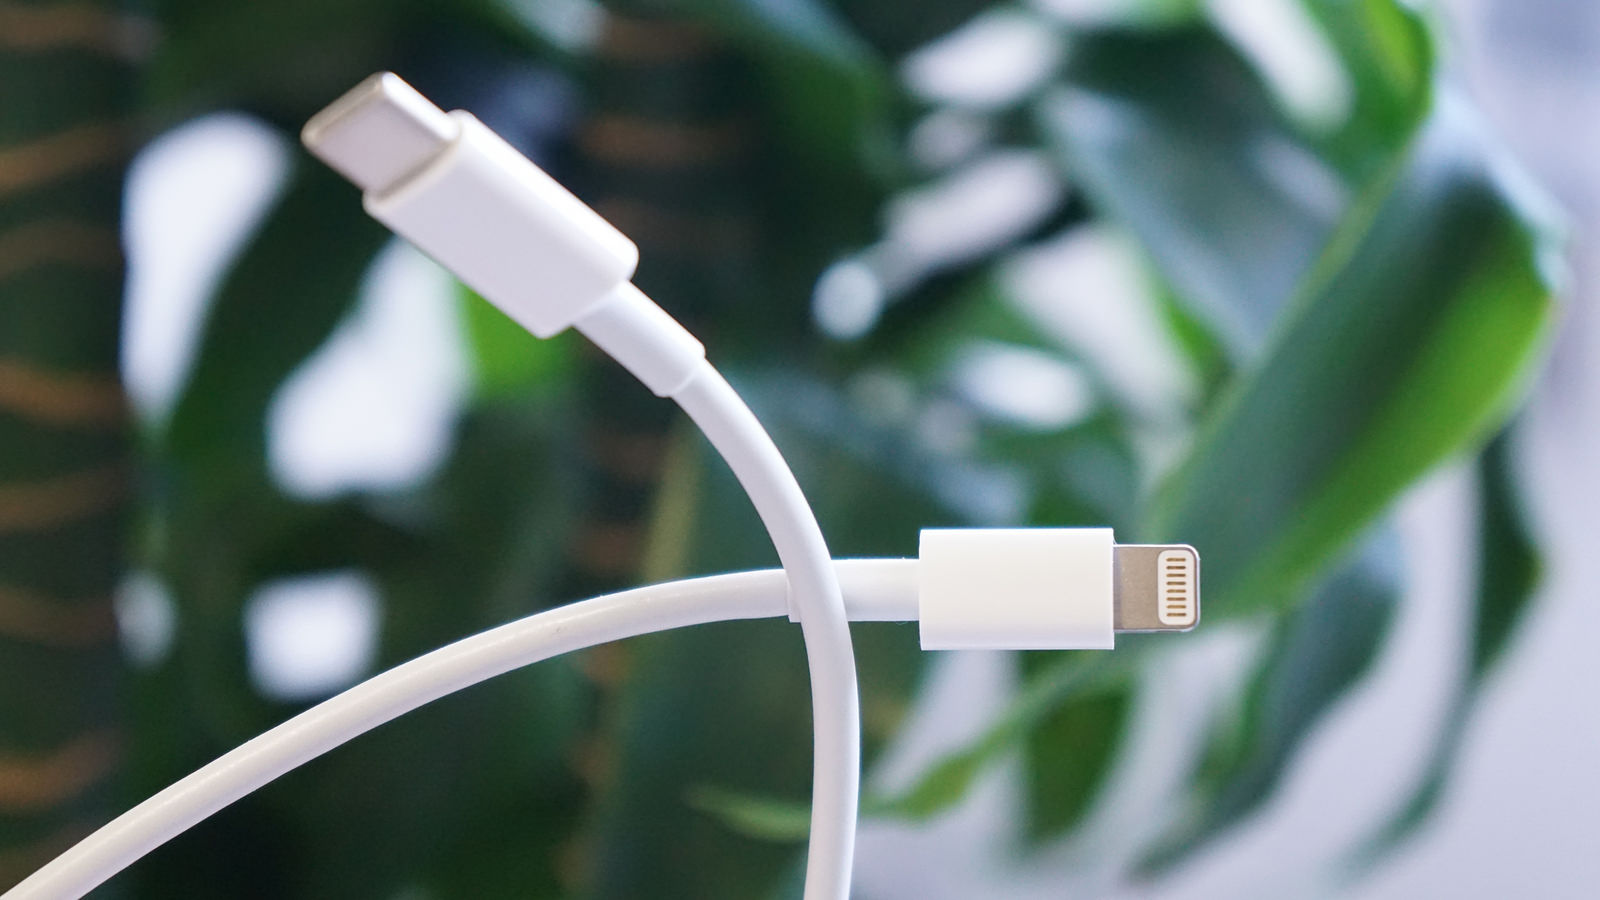 iPhoneを高速充電できる「USB-C to Lightningケーブル」が値下げ。通常ケーブルと同価格に